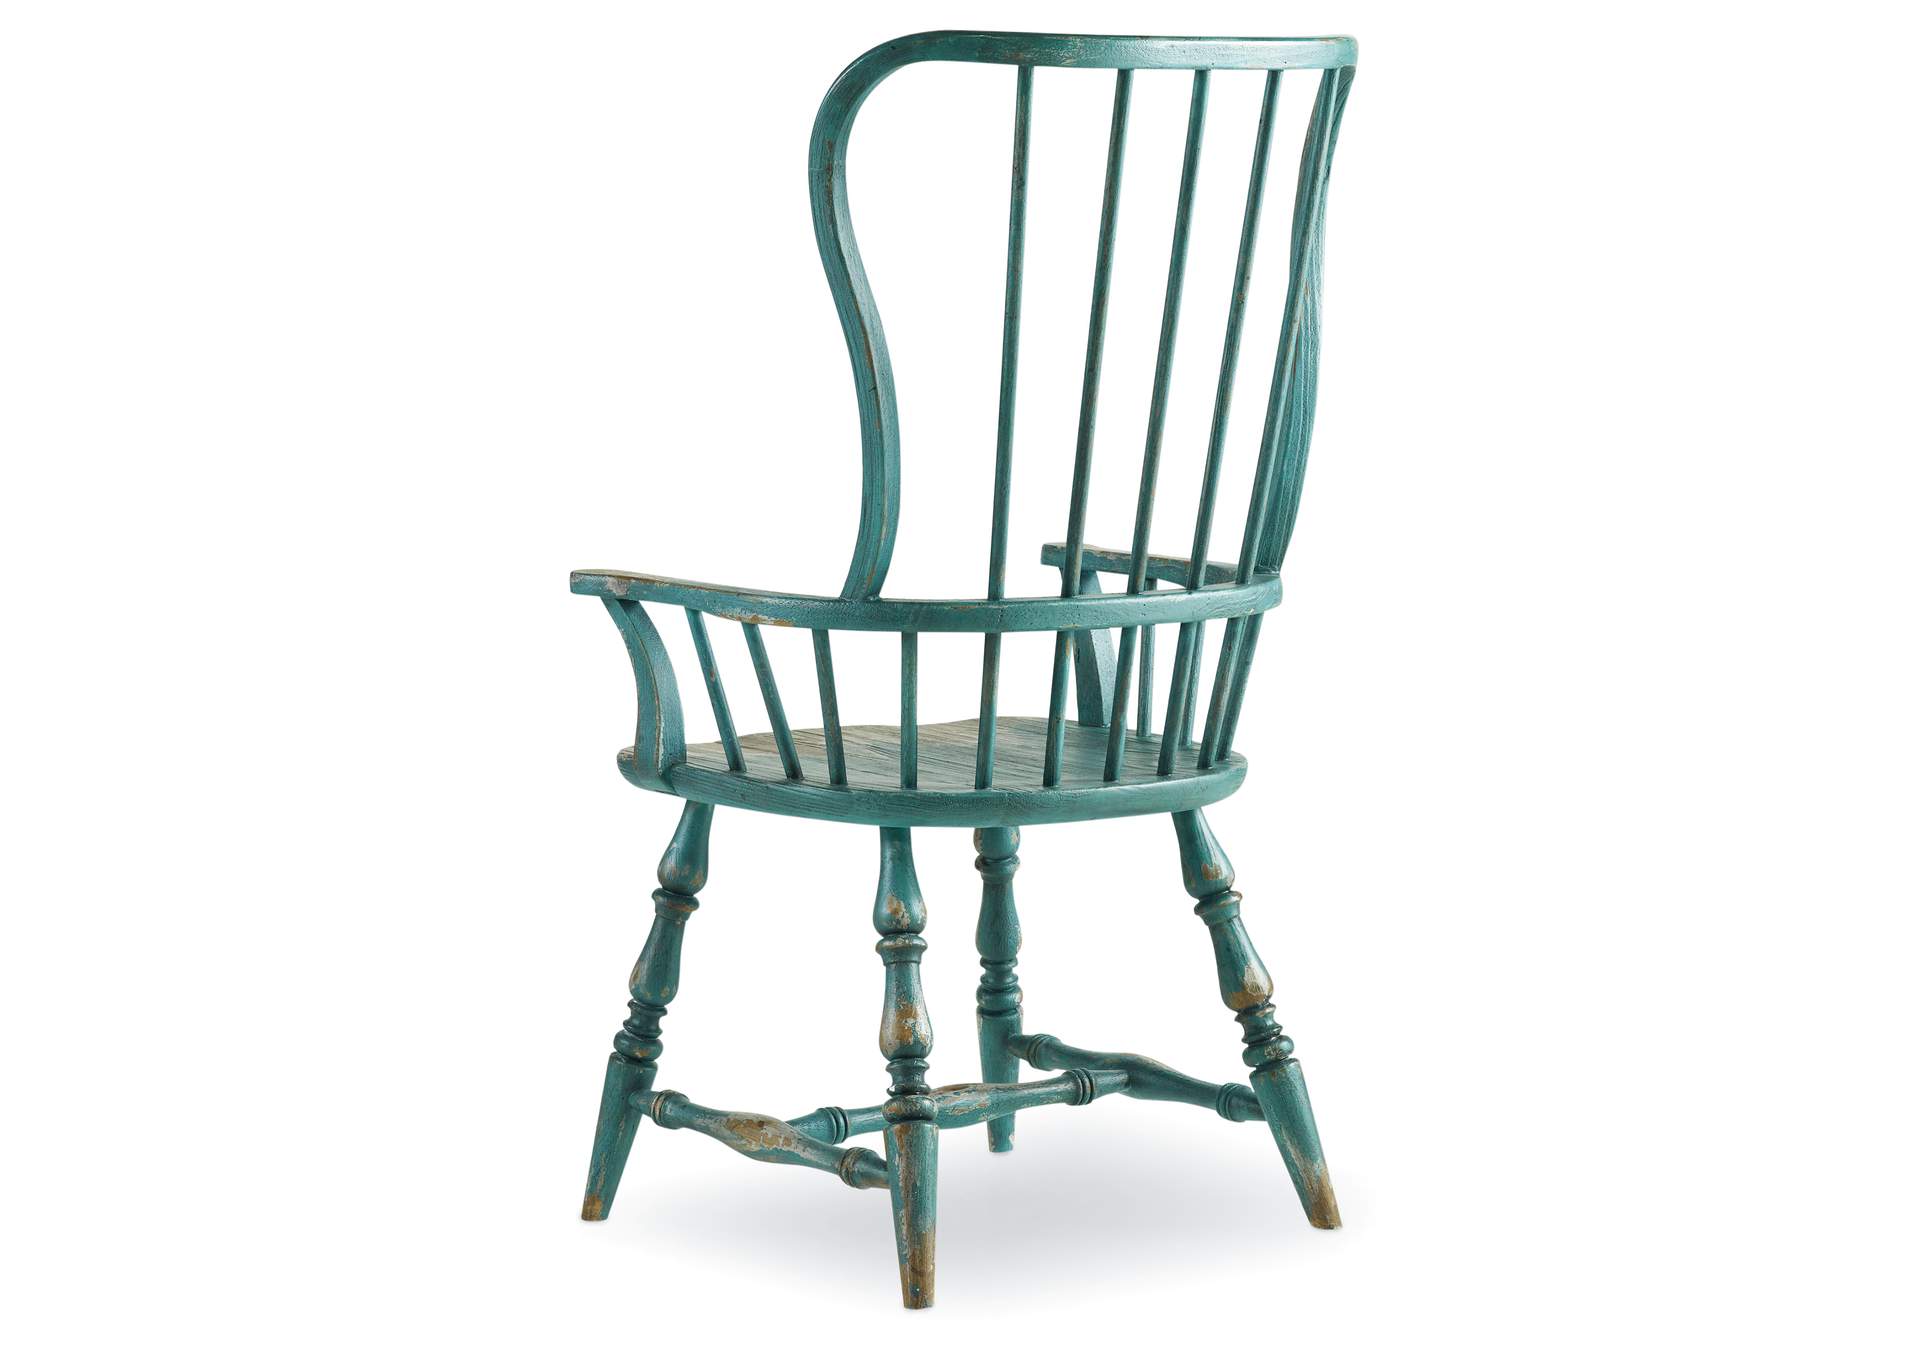 Sanctuary Spindle Arm Chair - 2 Per Carton - Price Ea,Hooker Furniture